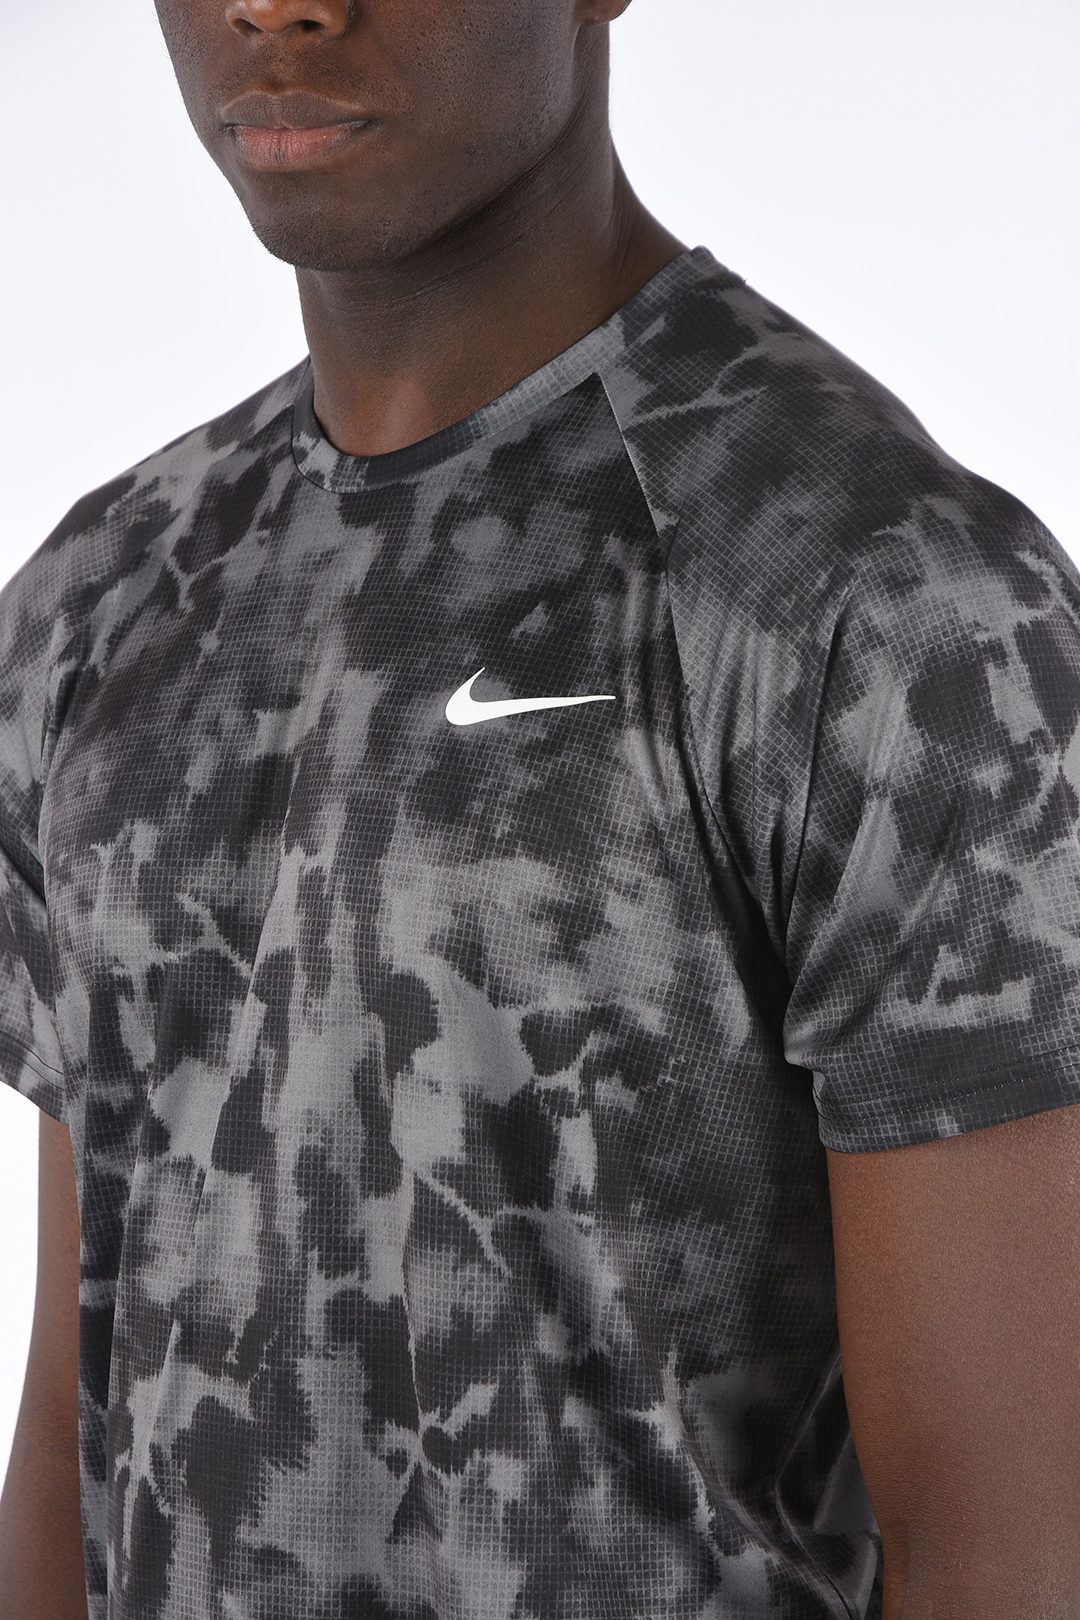 Spookachtig Liever Comorama Nike Camouflage T-shirt herren - Glamood Outlet